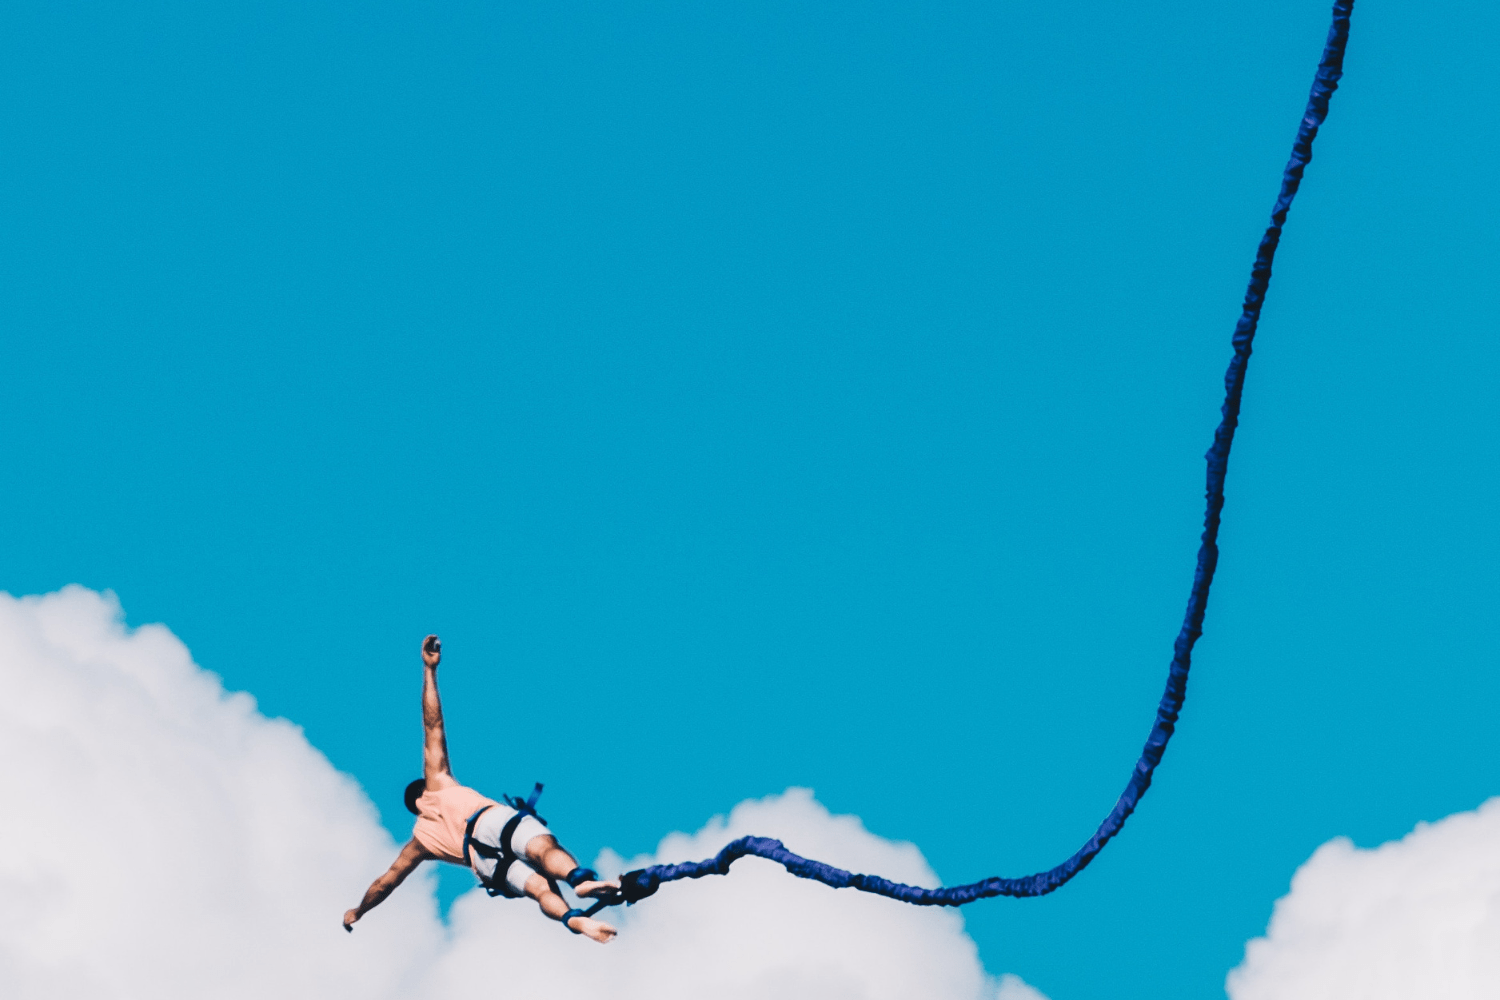 bungee-jumping-sports-in-dubai